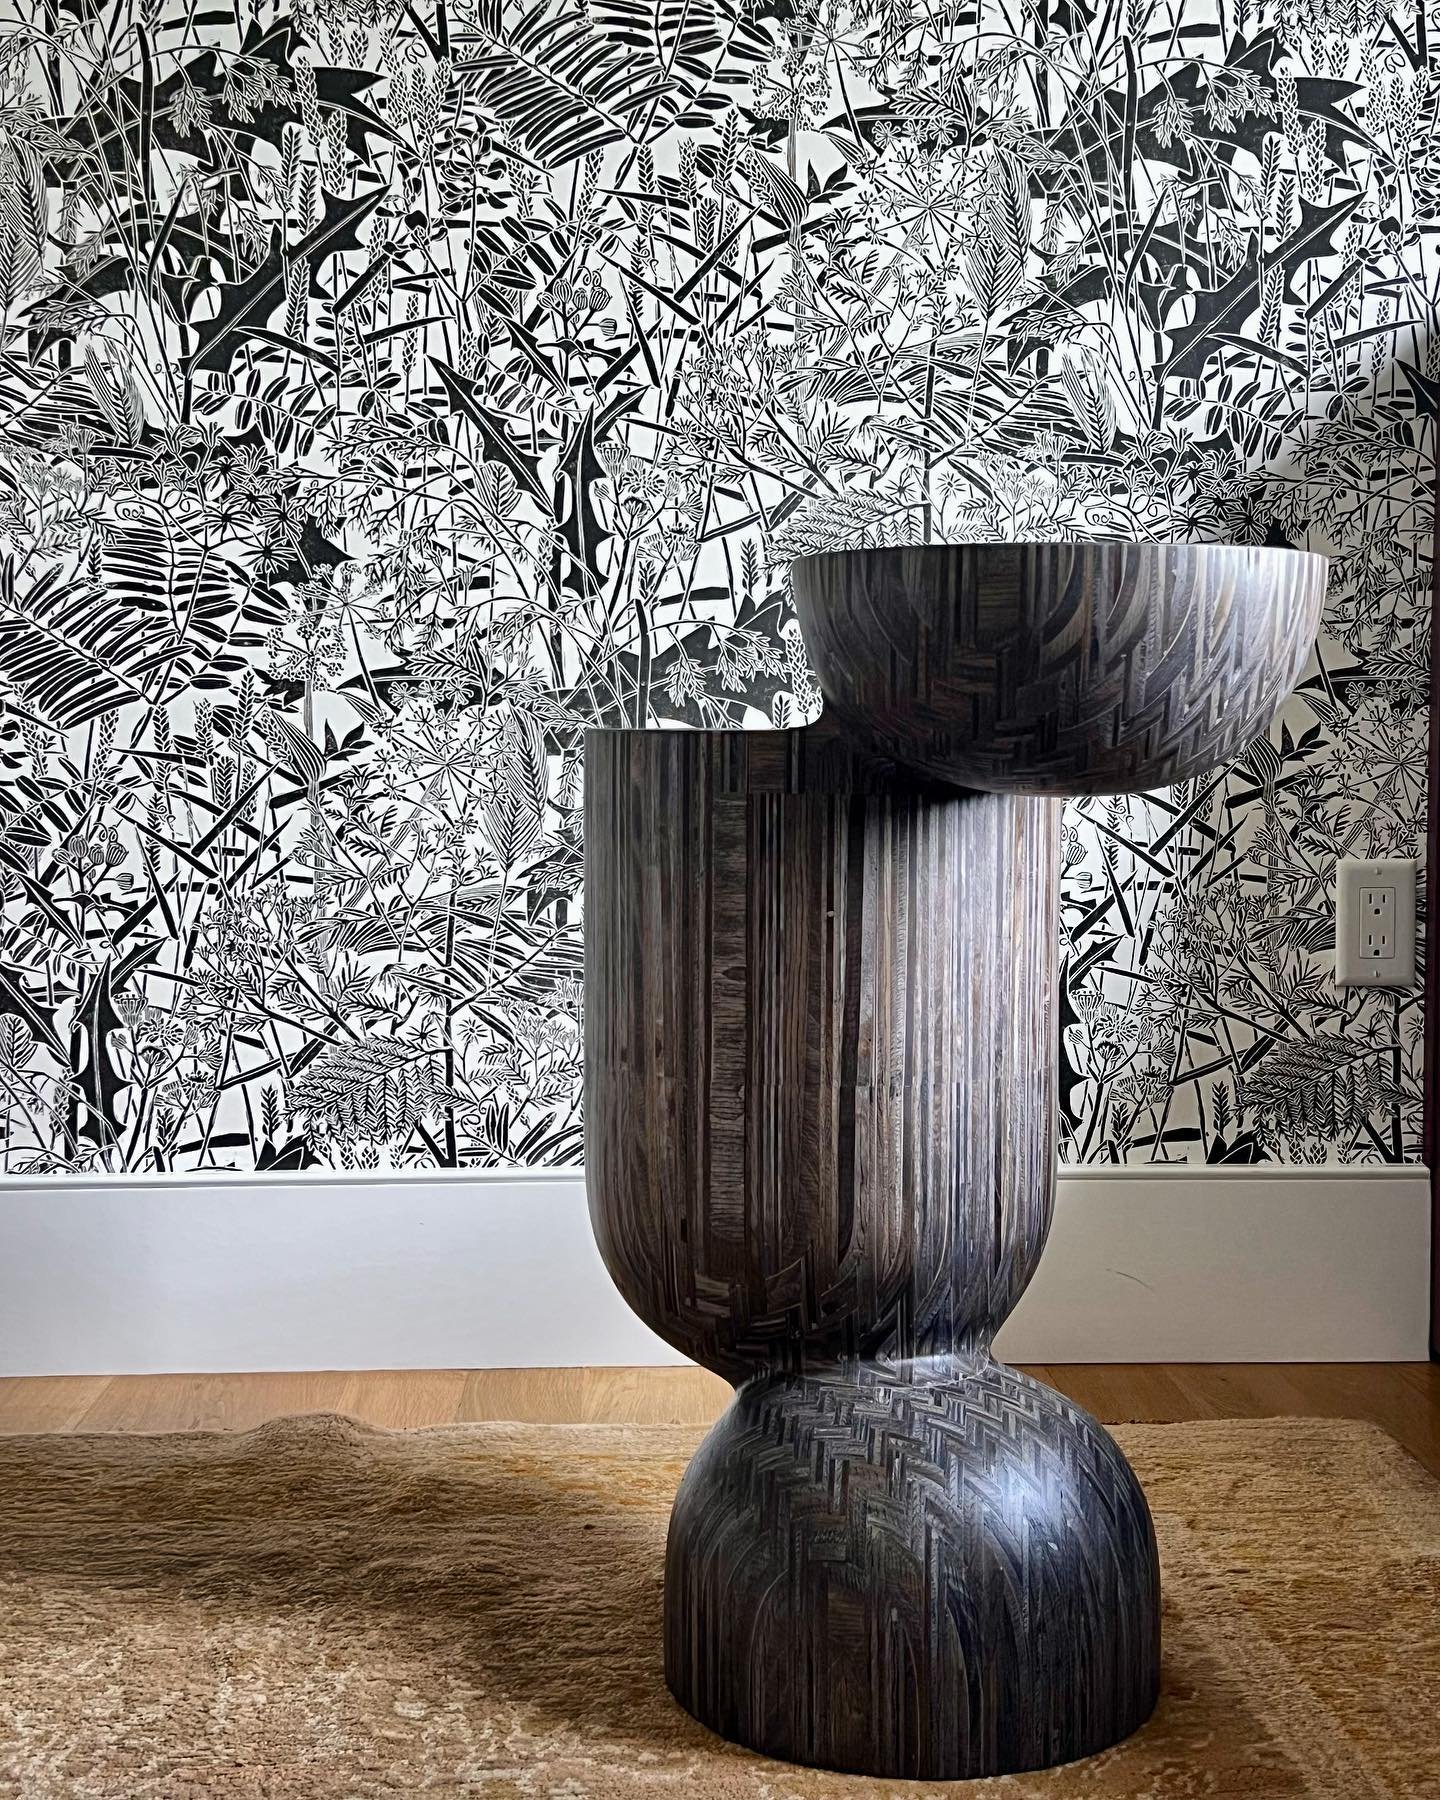 This Nerikomi Side table was made for a beautiful project in the berkshires by @nicolelanteridesign 

Photo courtesy of @nicolelanteridesign 

#studiofurniture #treyjonesstudio #plywood #art #design #woodworking #sculpture #artfurniture #designfurnit